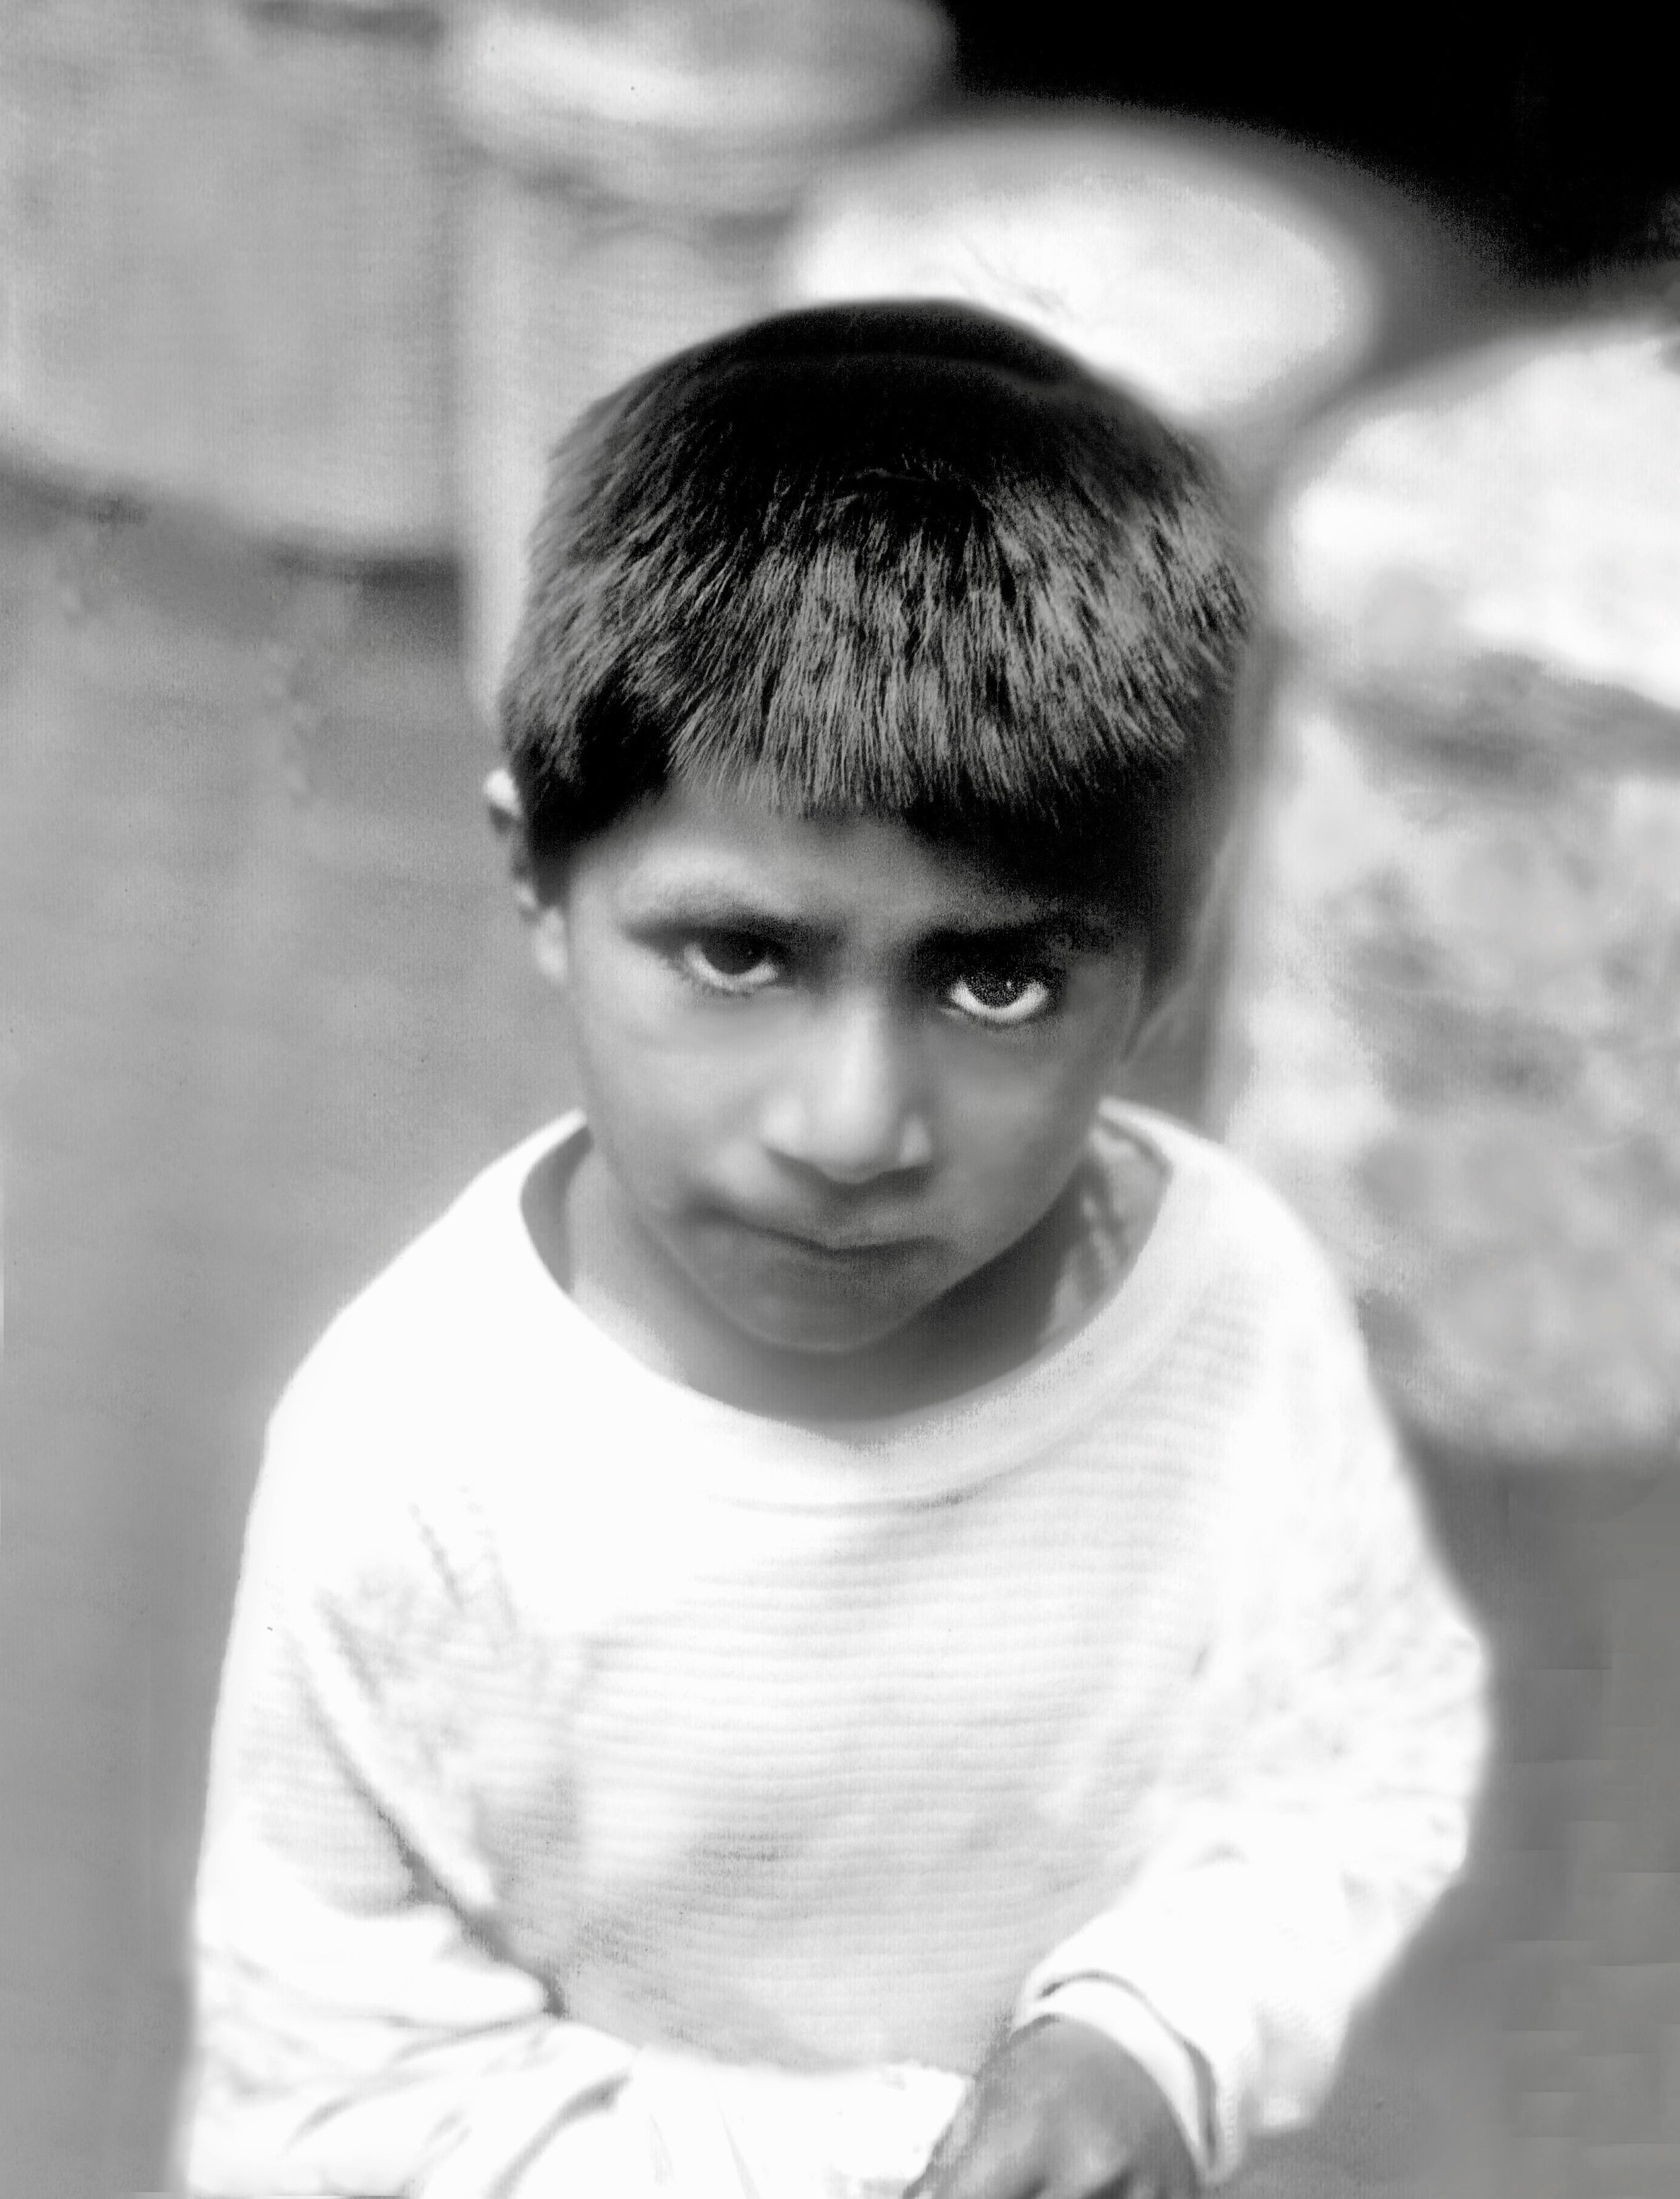 Tijuana Boy in black and white-edit.jpg